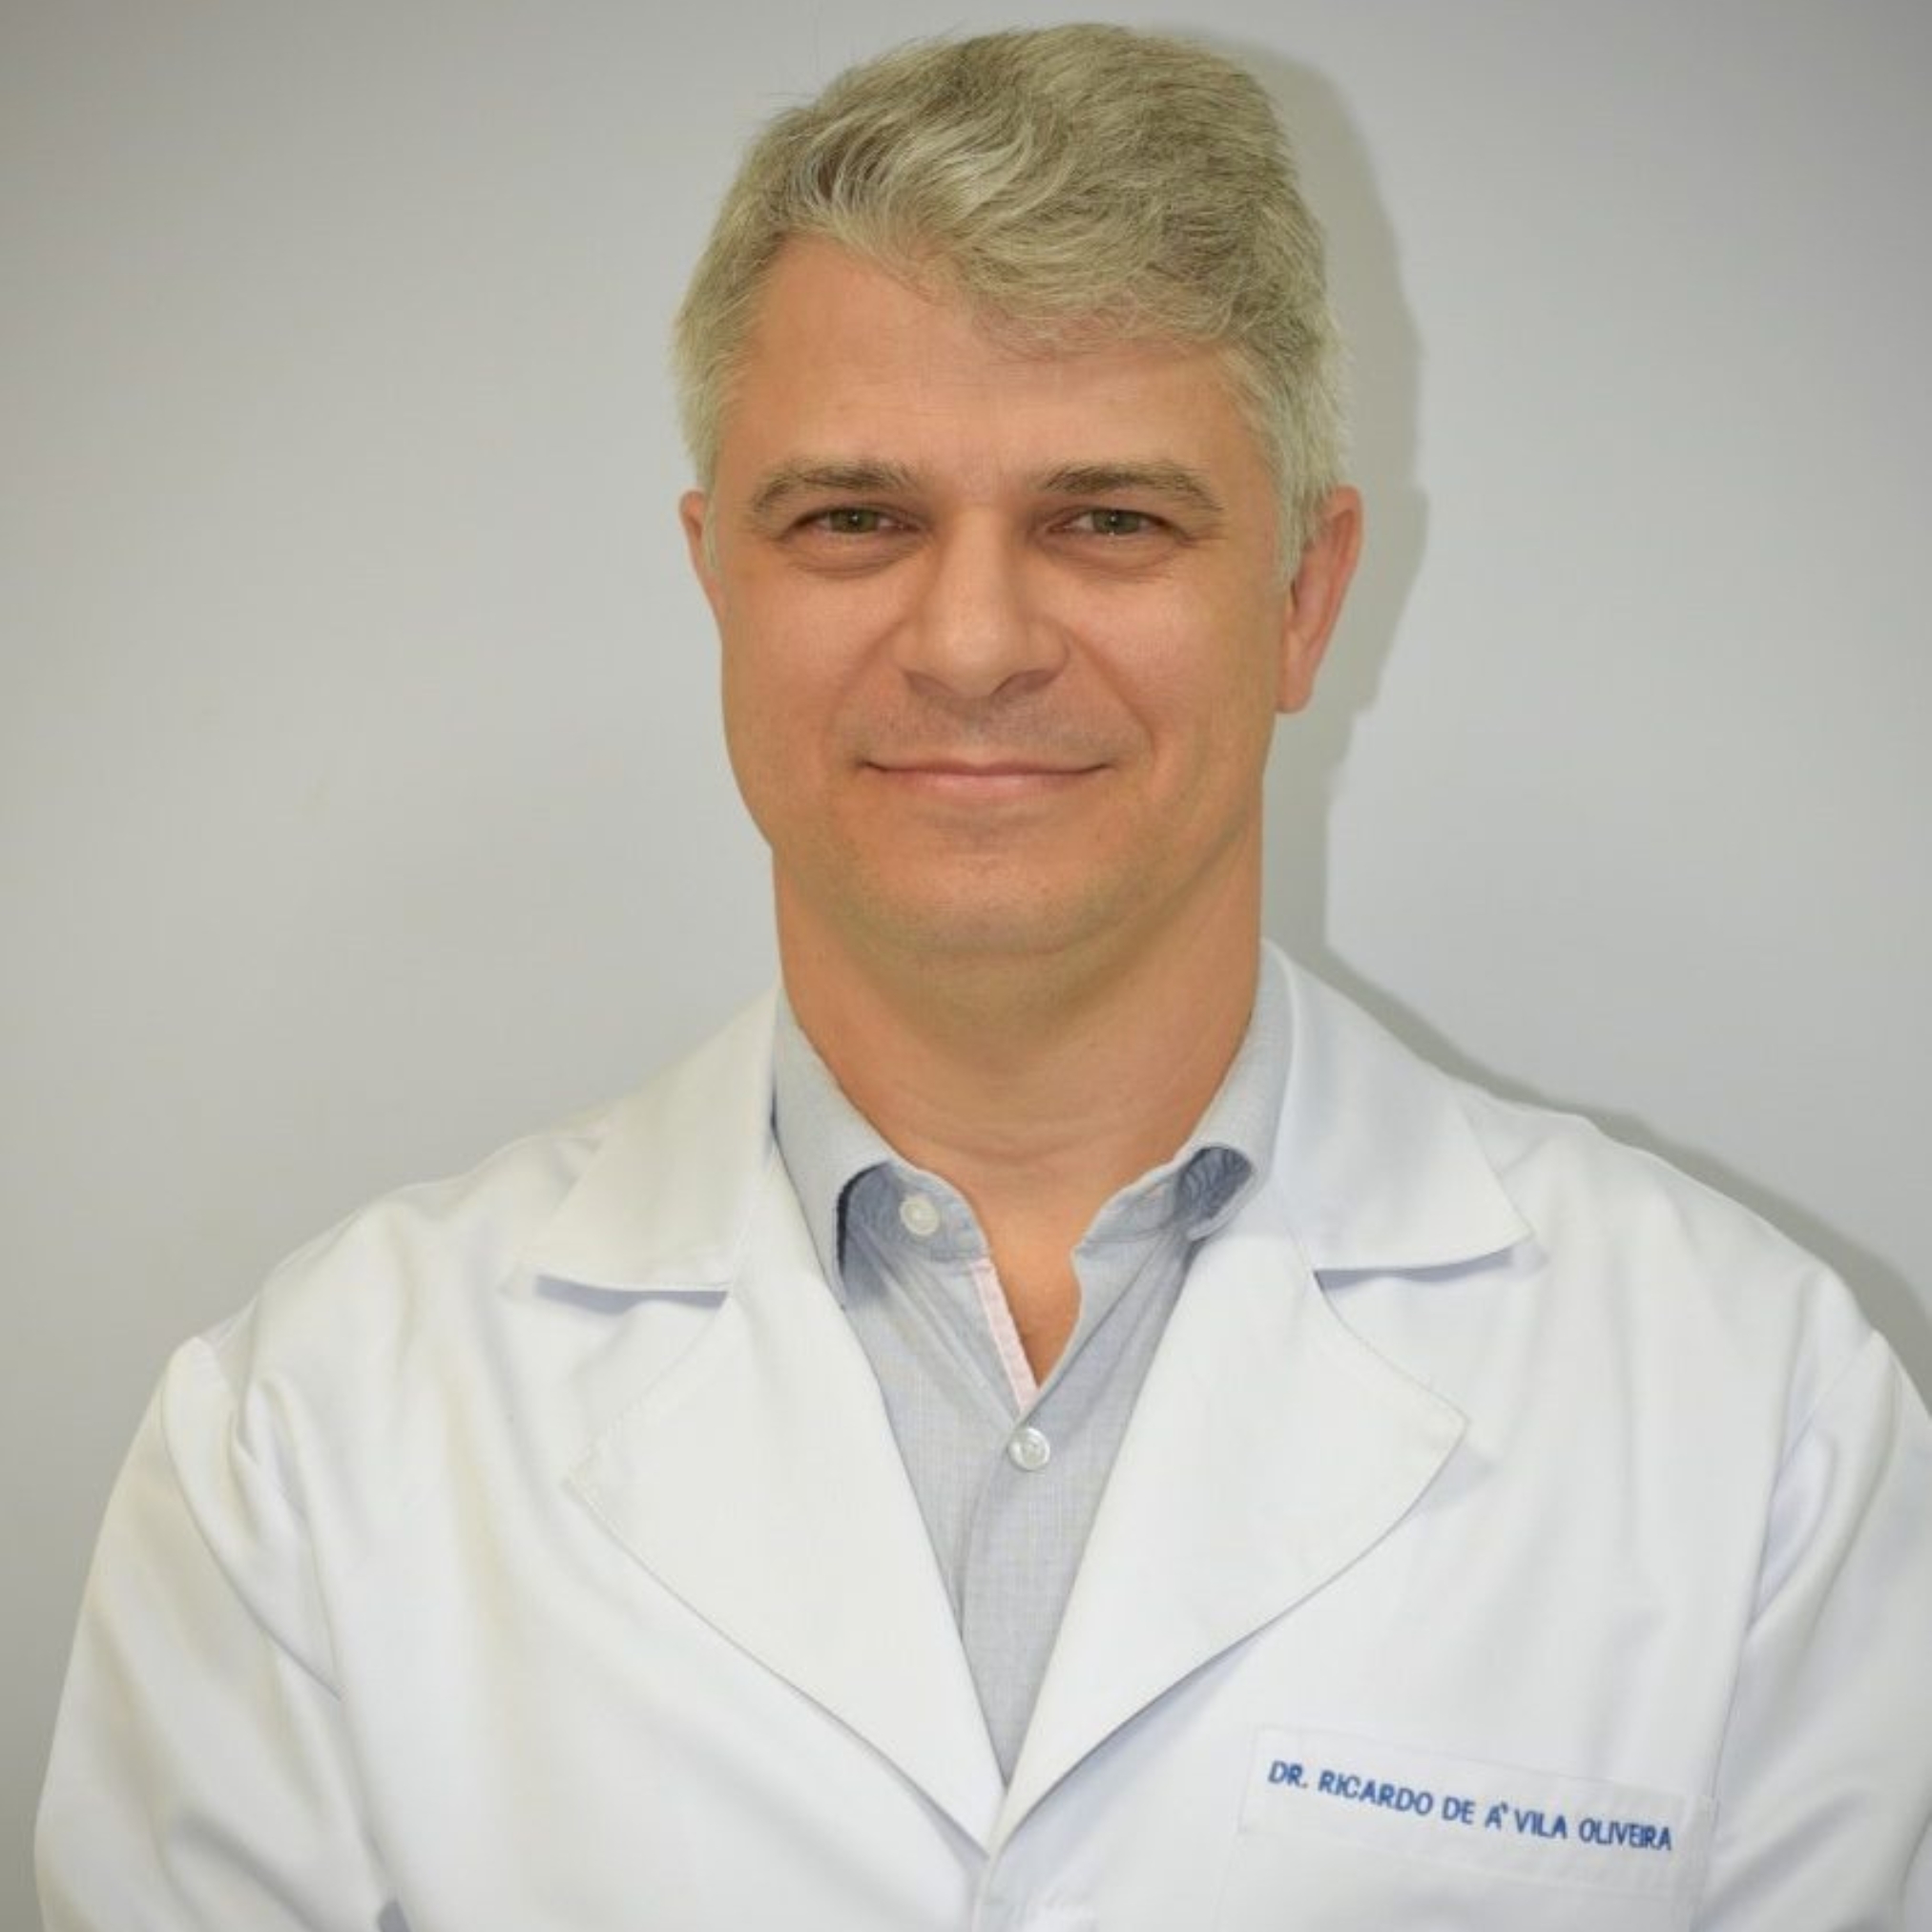 Dr. Ricardo de Avila - Cirurgia Vascular